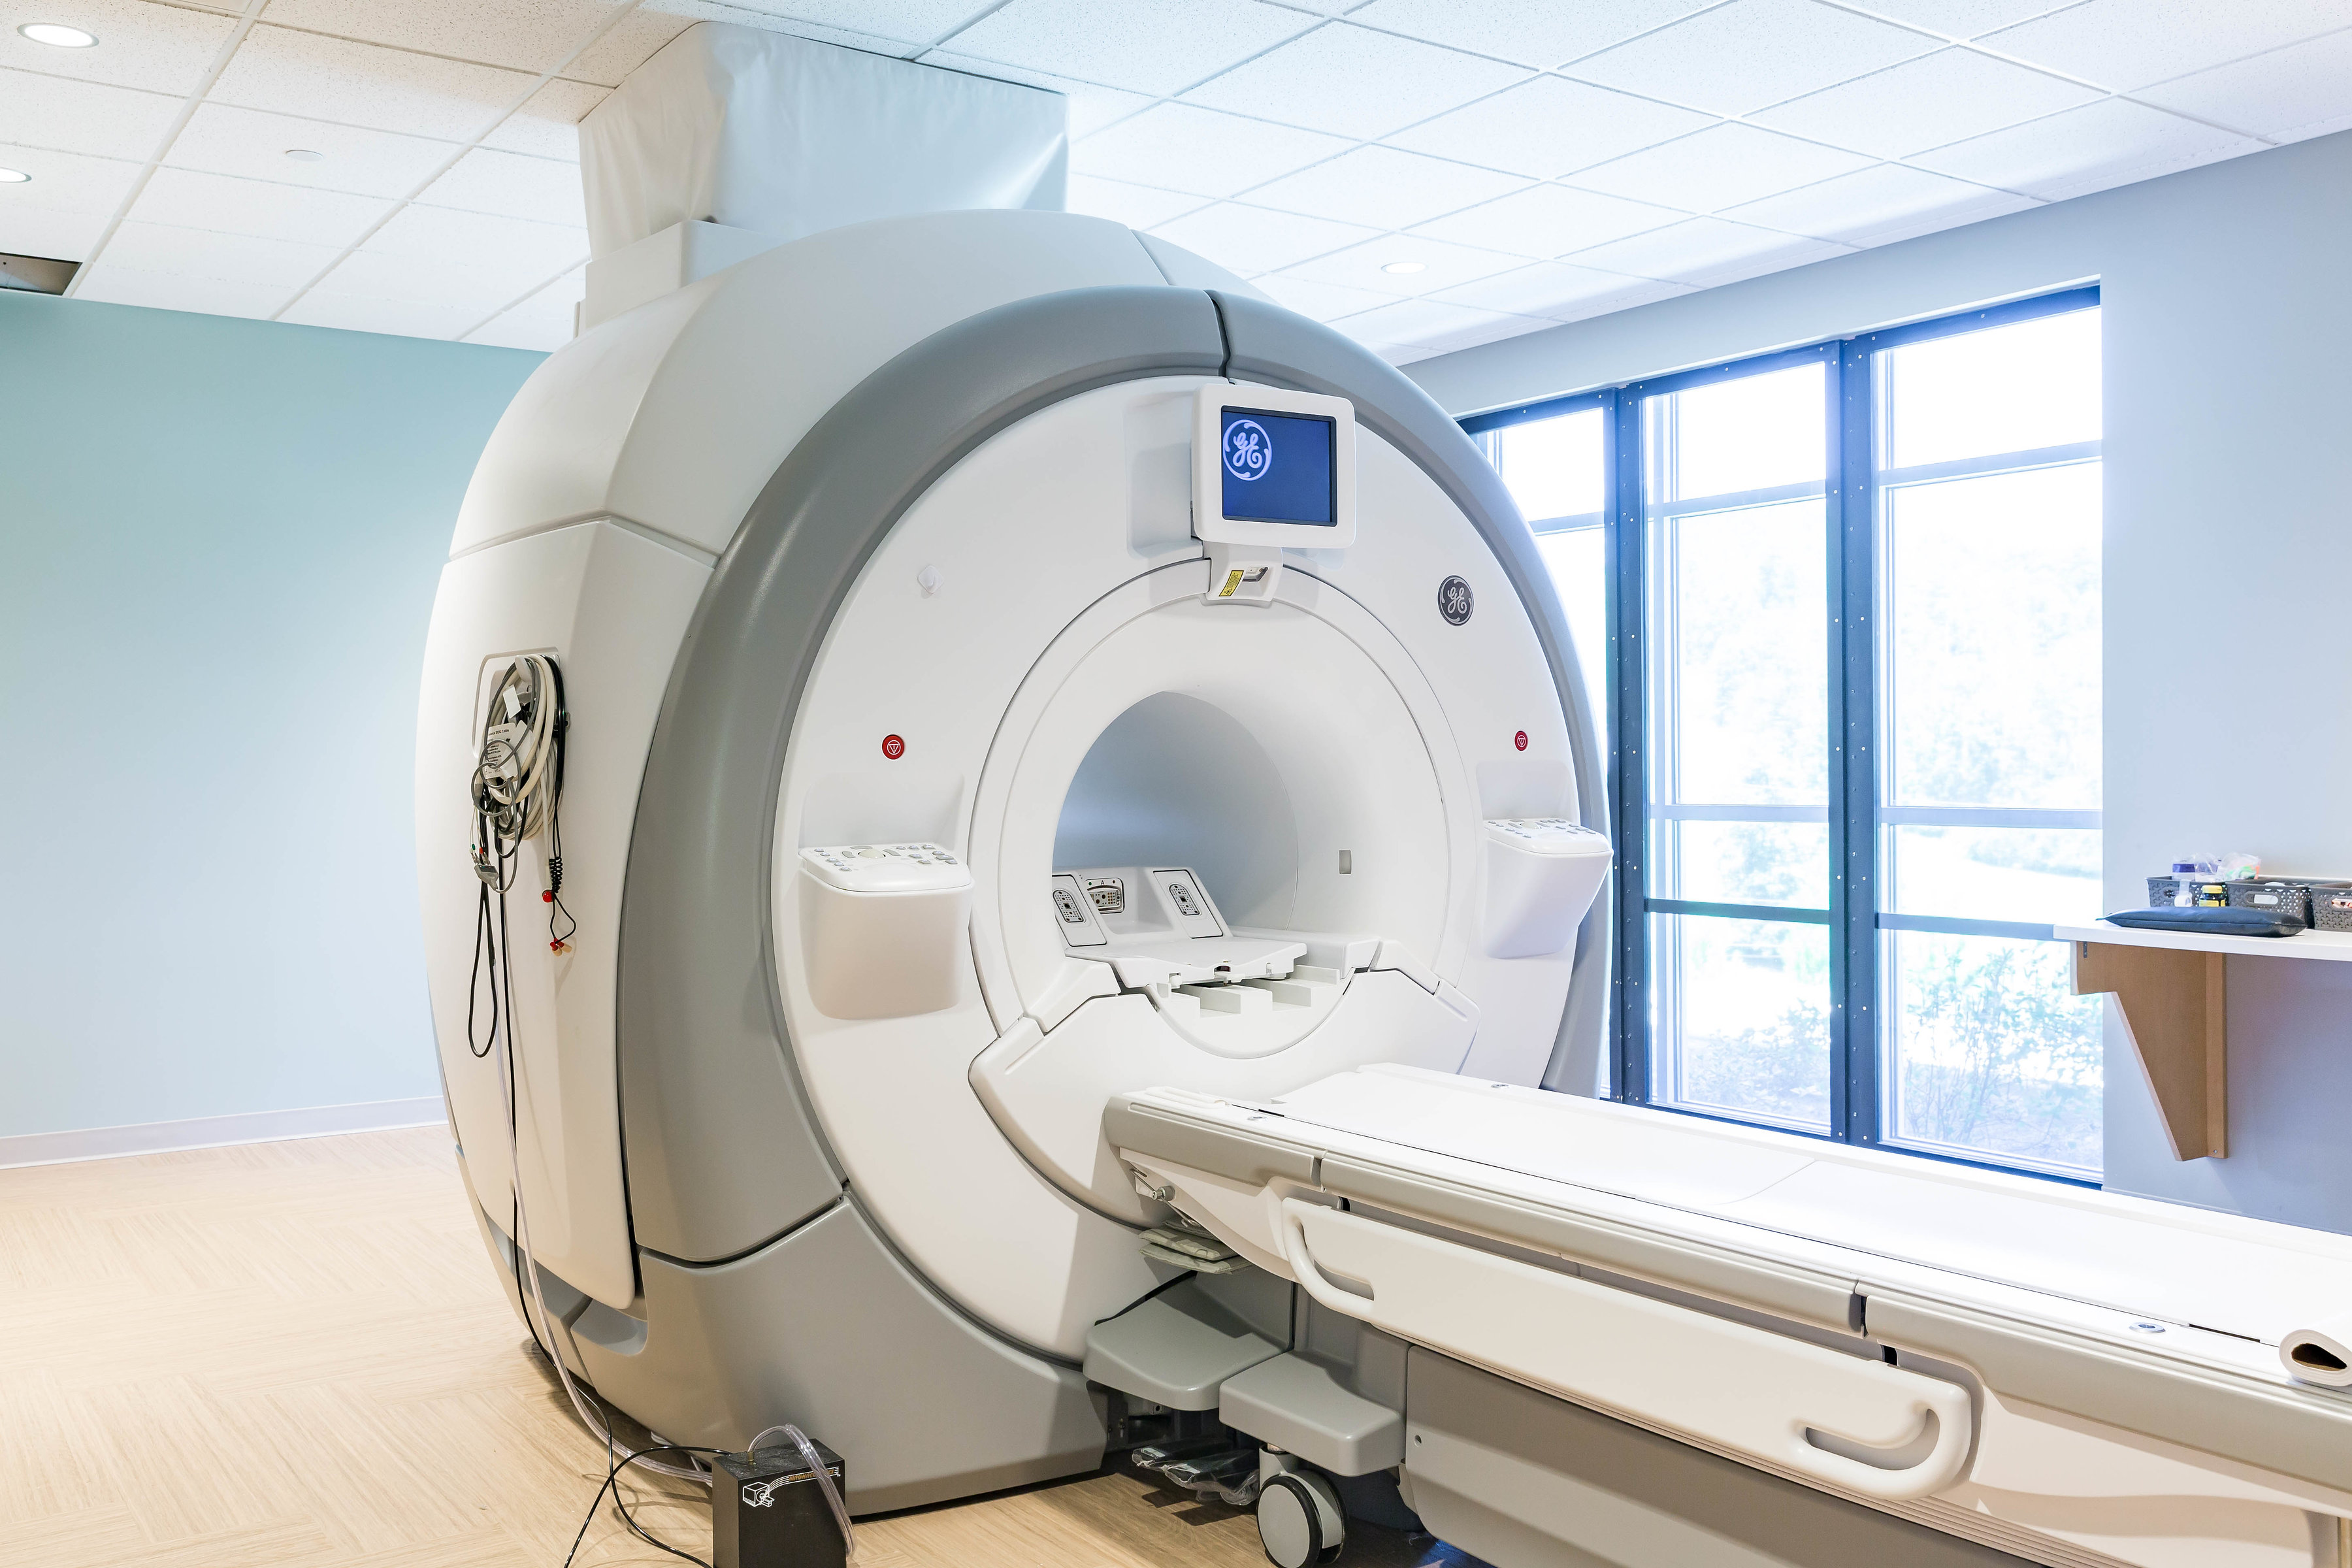 MRI Procedures Safety Measures :